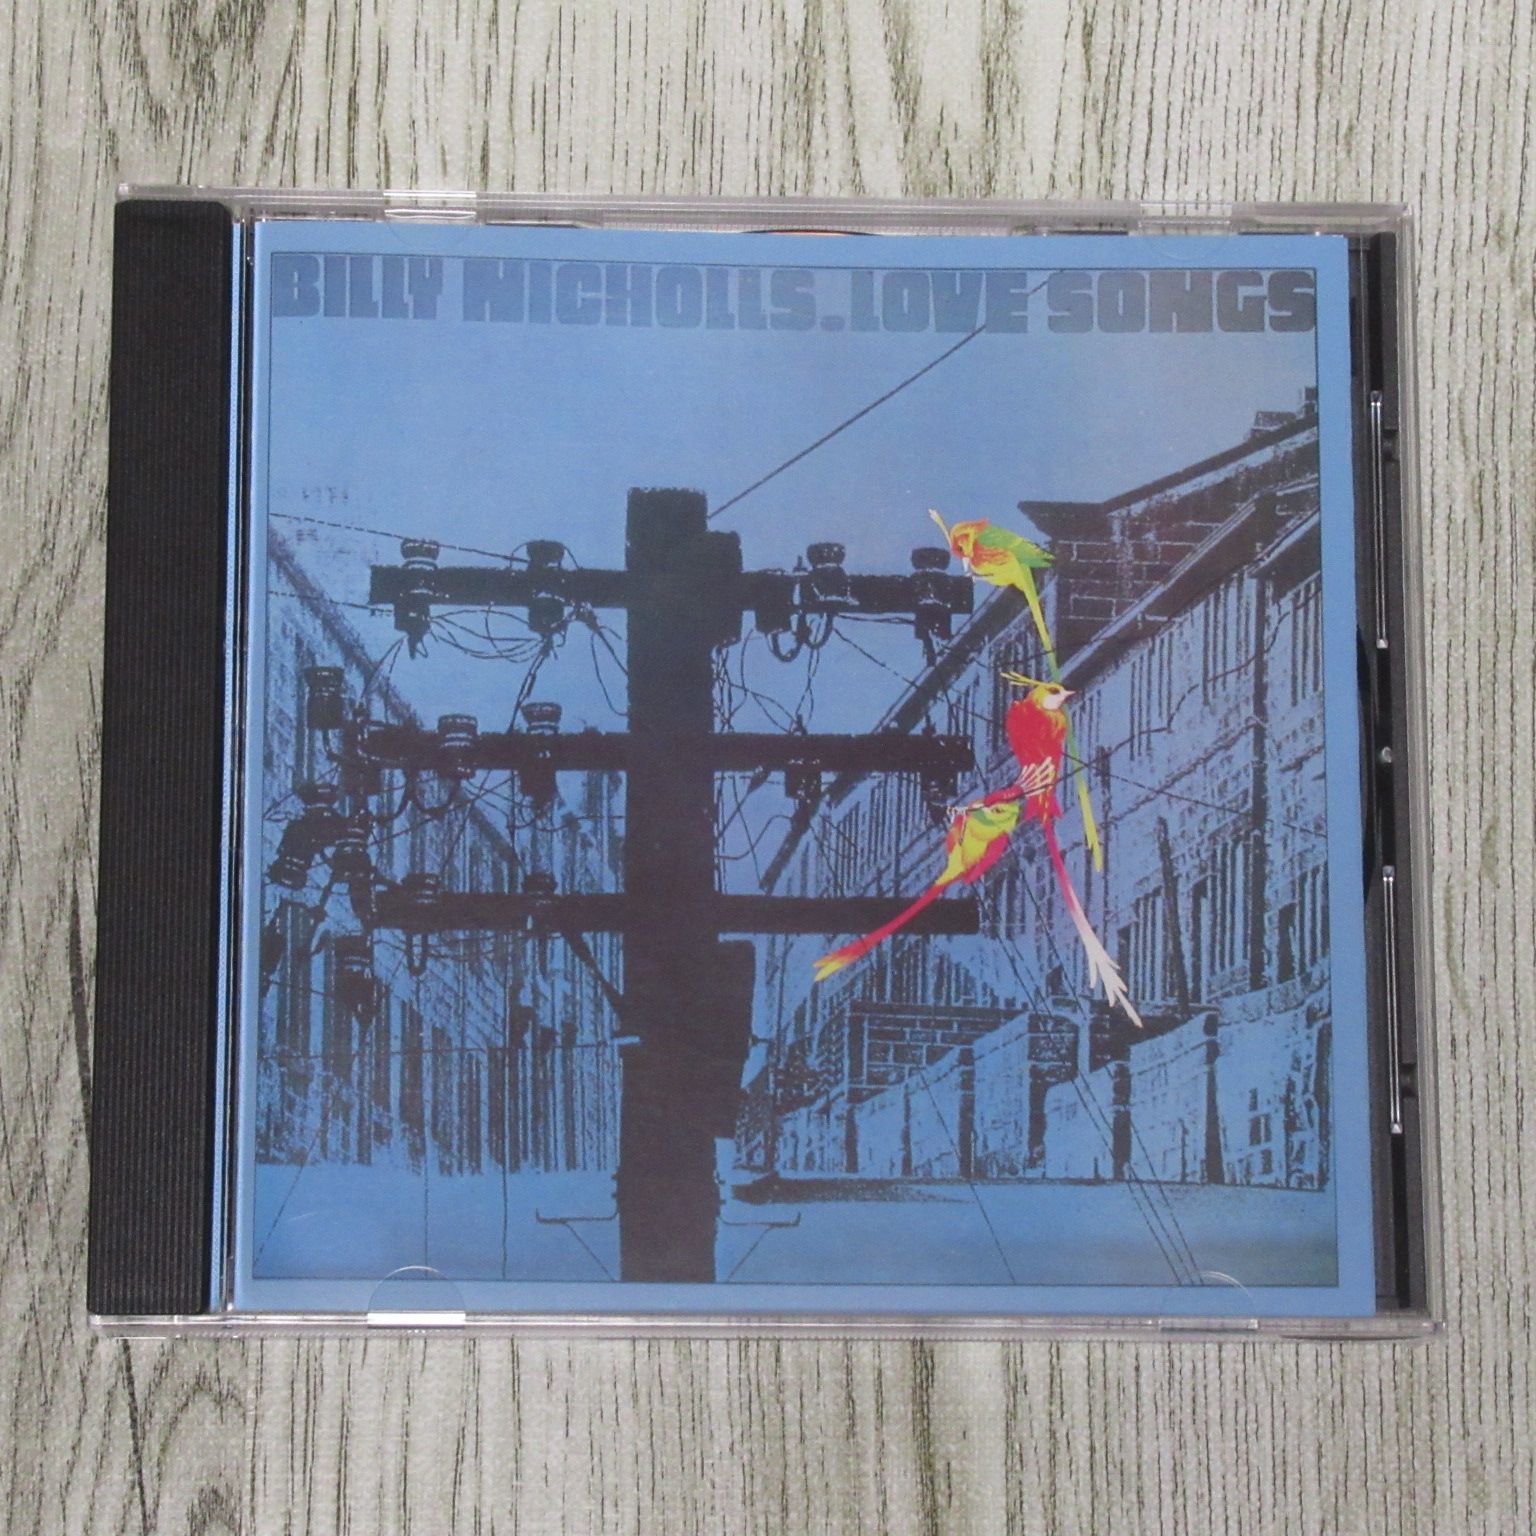 CD BILLY NICHOLLS LOVE SONGS UK SWCD 002 ビリー・ニコルス 2ND（1STのポップ・サイケではなくUK  SSW・スワンプ・フォーク系） RON WOOD IAN MCLAGAN PETE TOWNSHEND - メルカリ